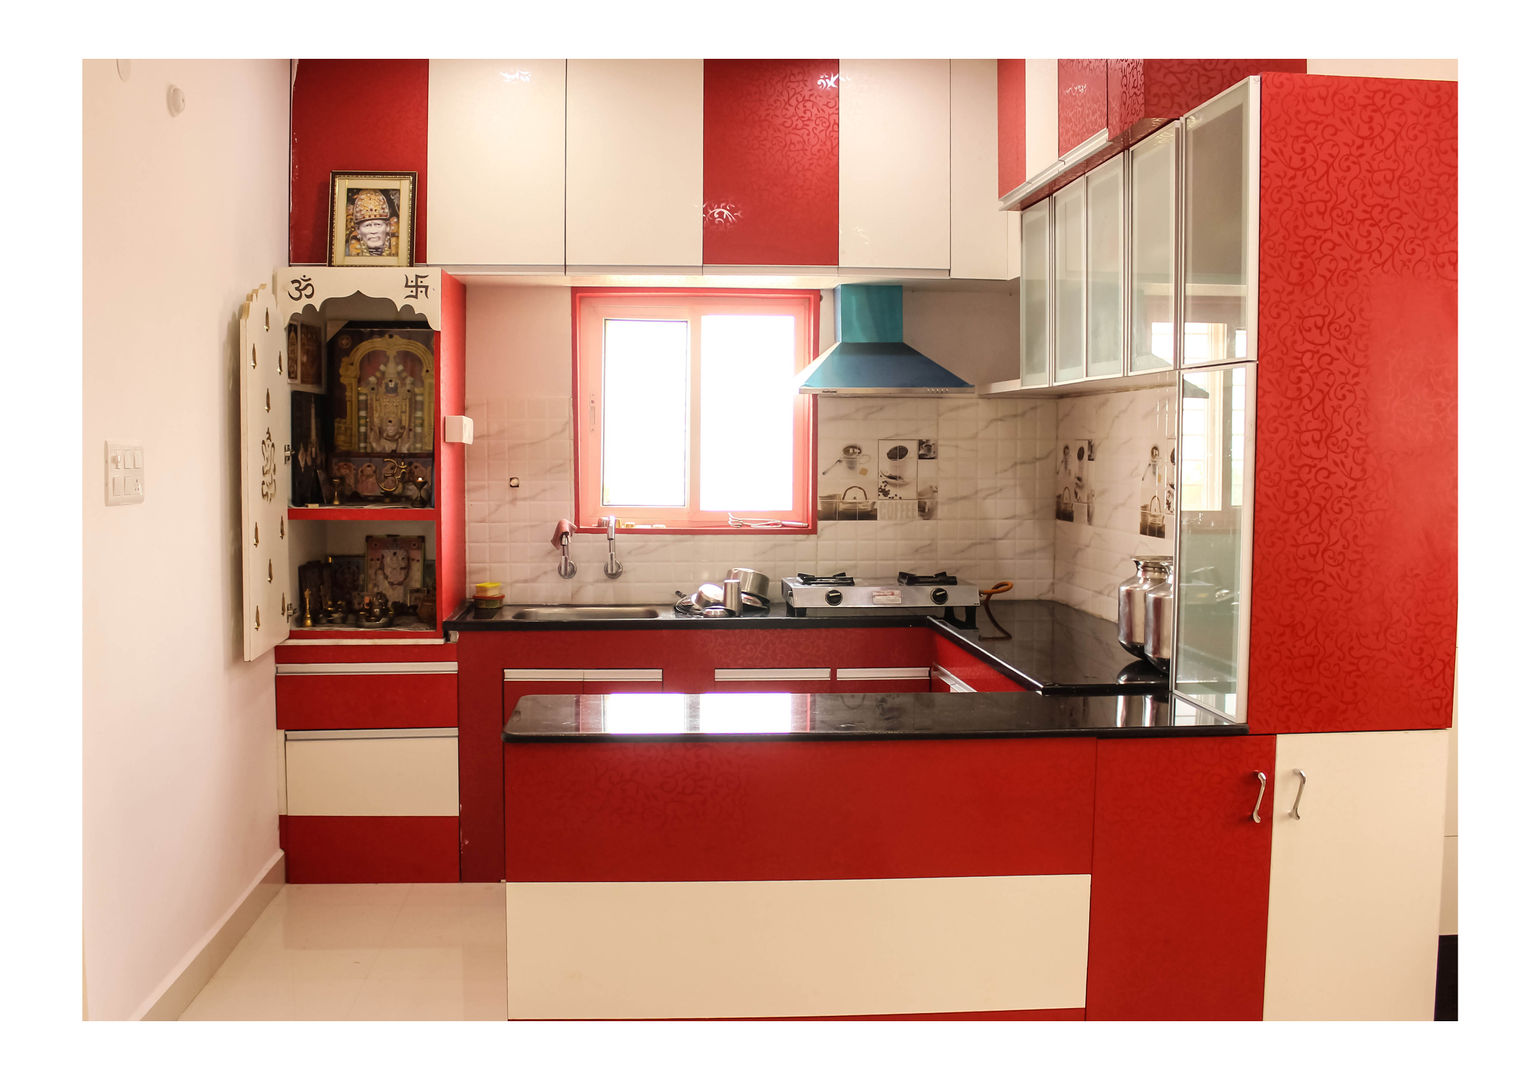 2 Bedroom Flat at Manikonda, Happy Homes Designers Happy Homes Designers Nhà bếp phong cách hiện đại Cabinets & shelves